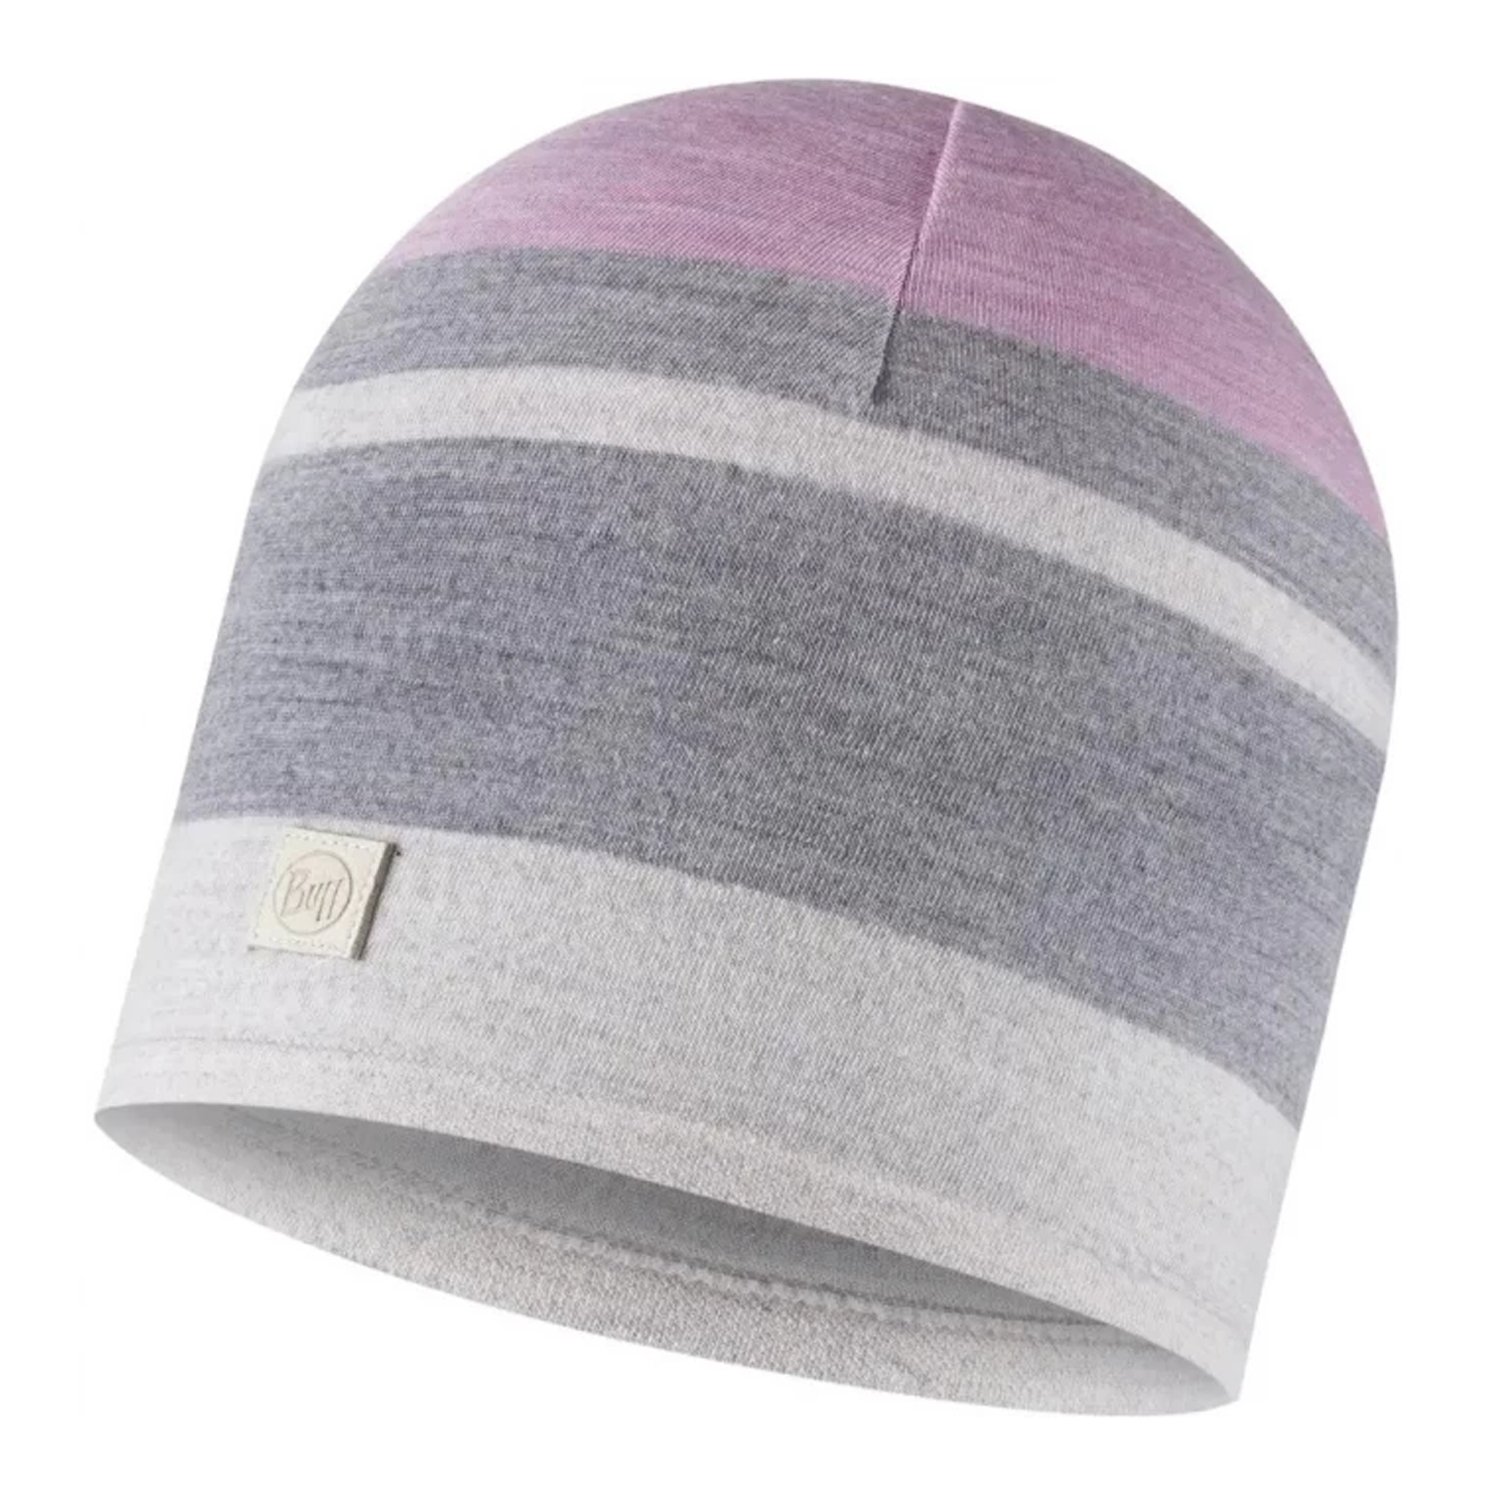 Шапка Buff Merino Move Hat Light Grey, US:one size, серый, 130221.933.10.00